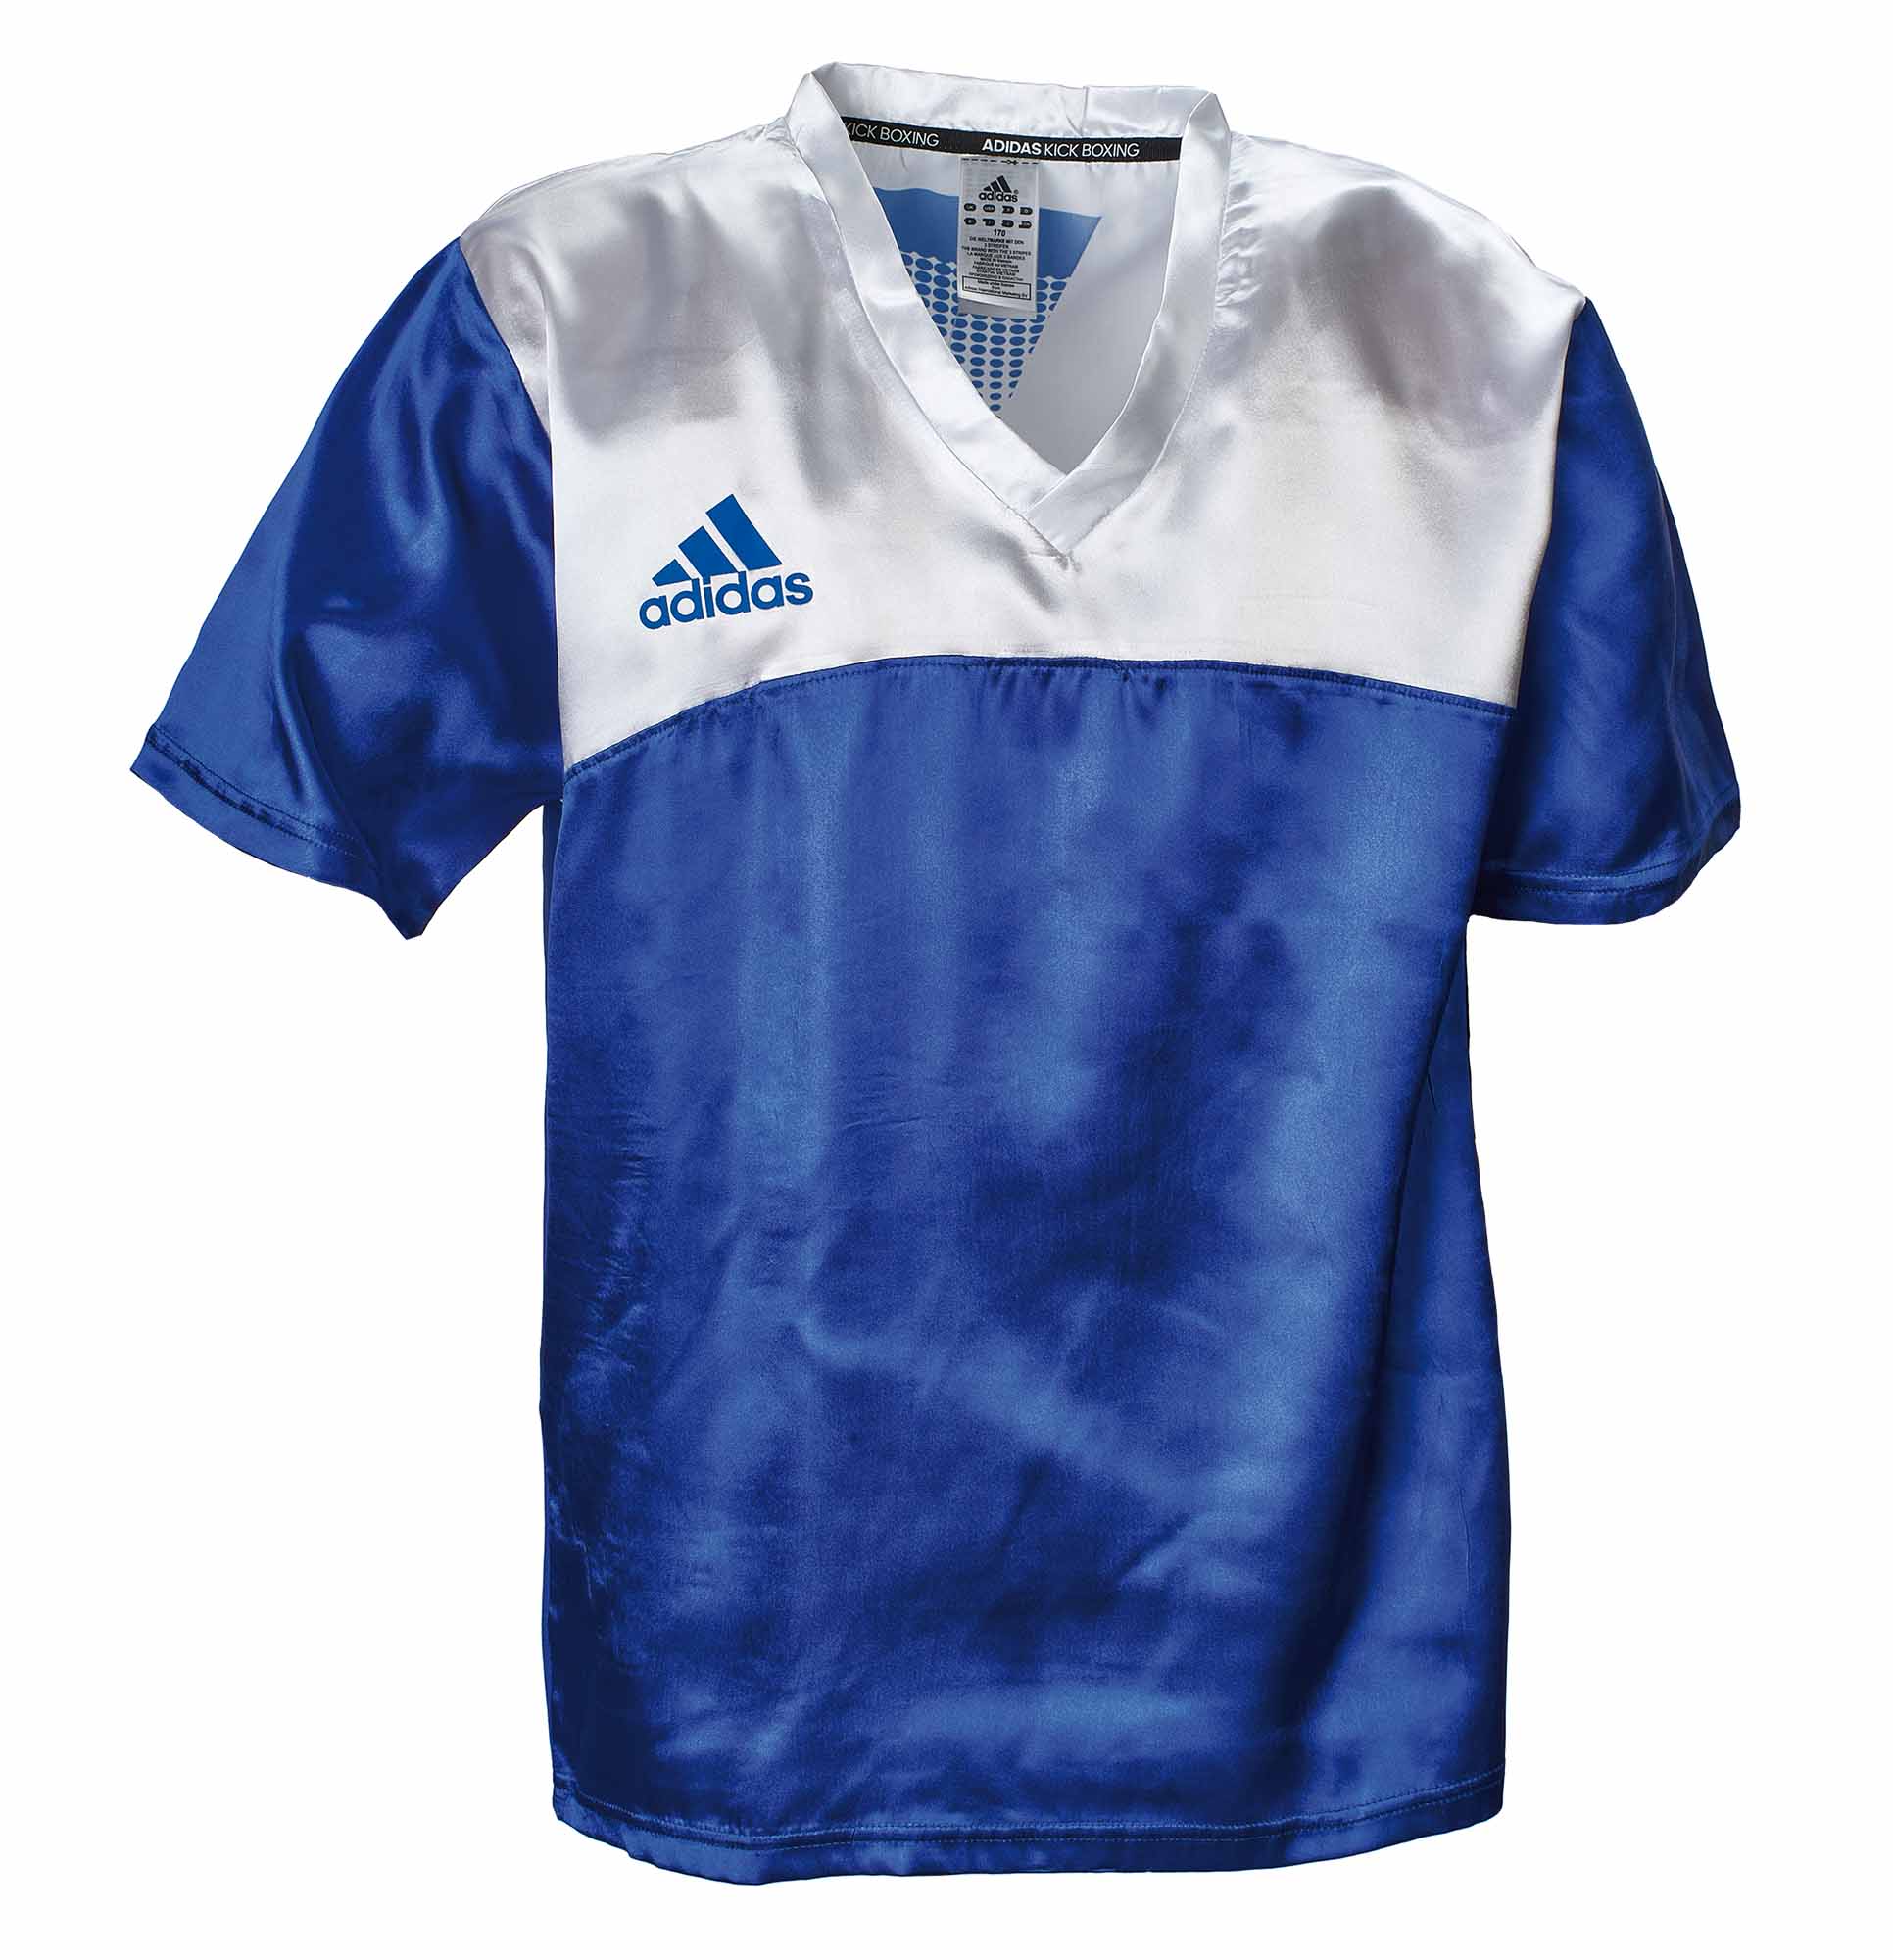 adidas Kickbox-Shirt blau/weiß, adiKBUN100S